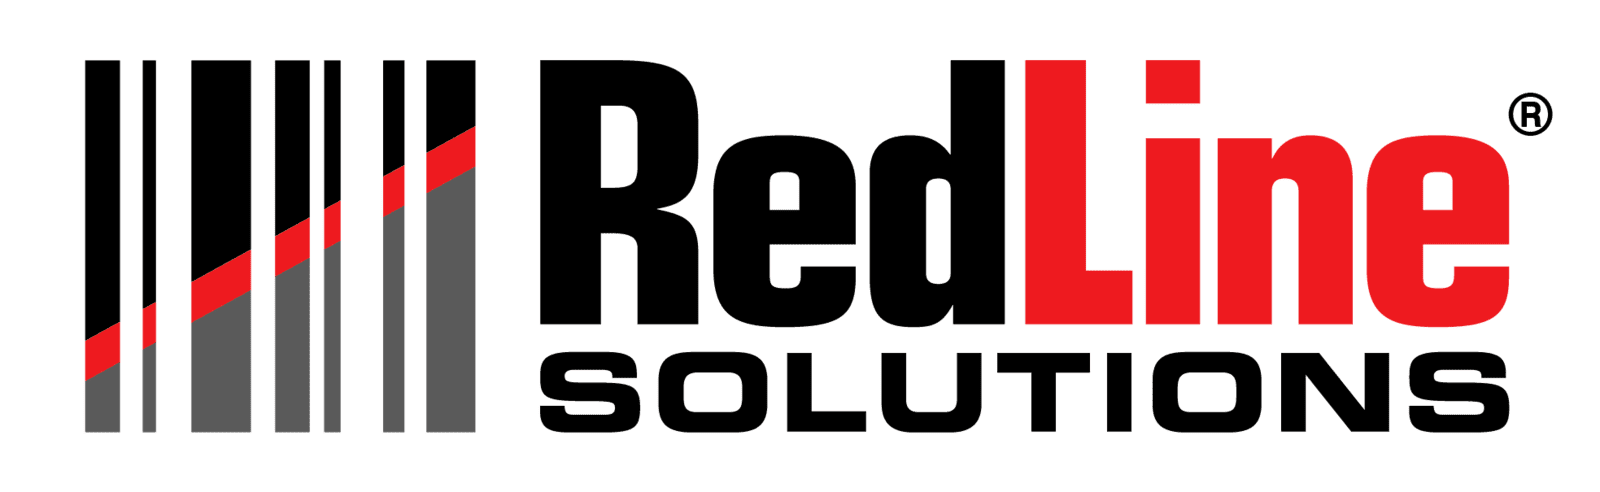 RedLine Solutions